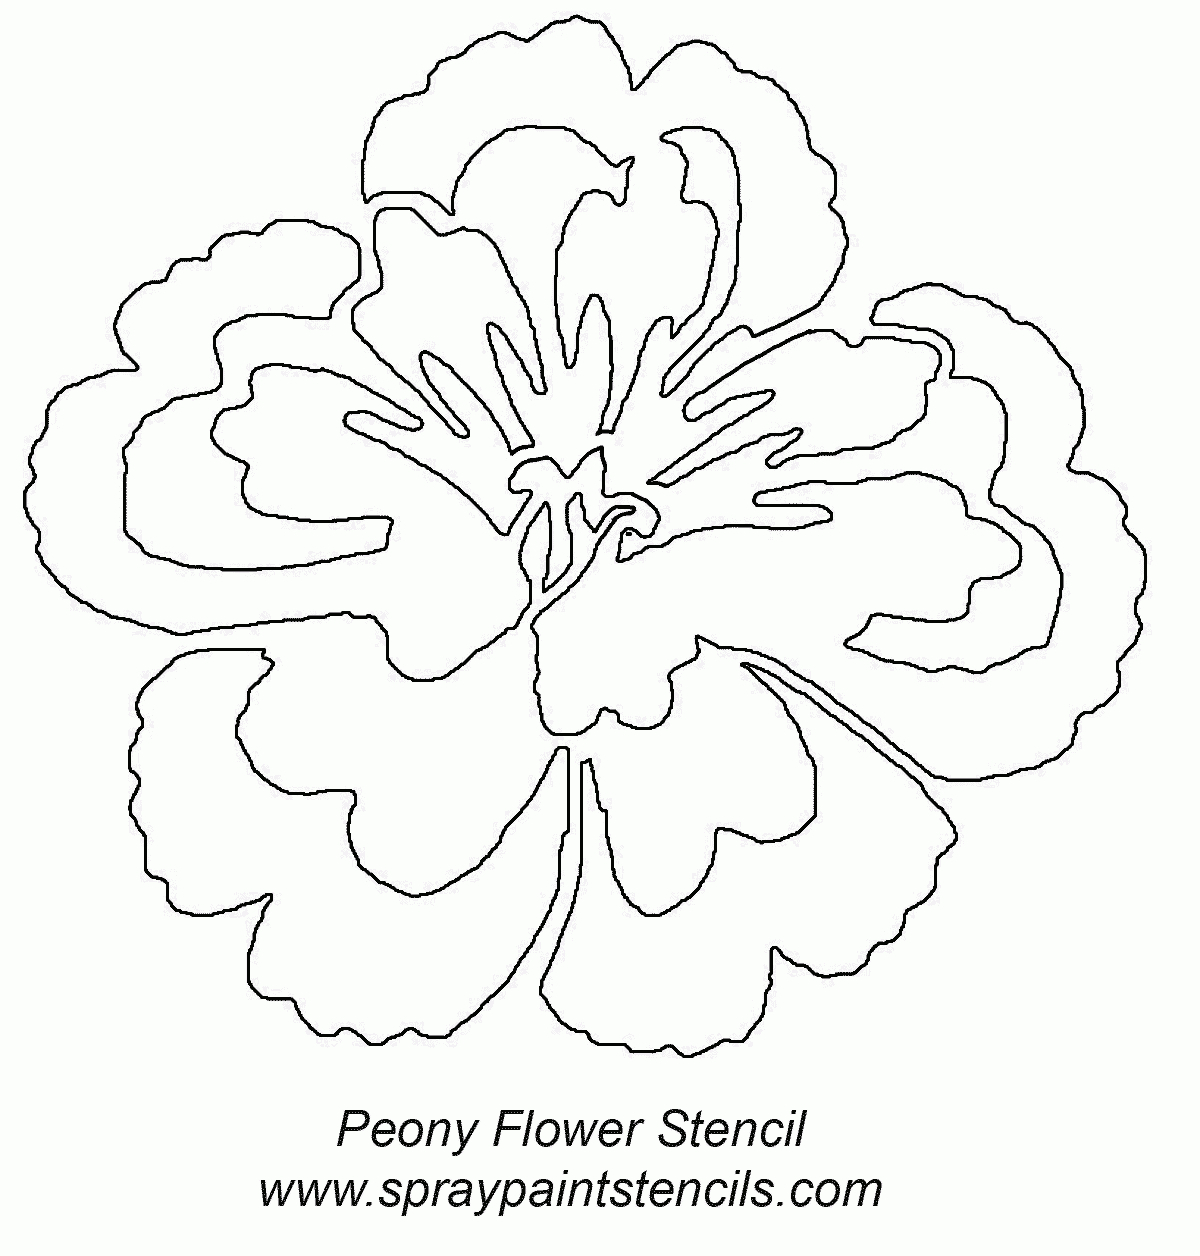 Free Flower Stencils You Can Print | Shadow Grass Or Cat Tails - Free Printable Flower Stencils